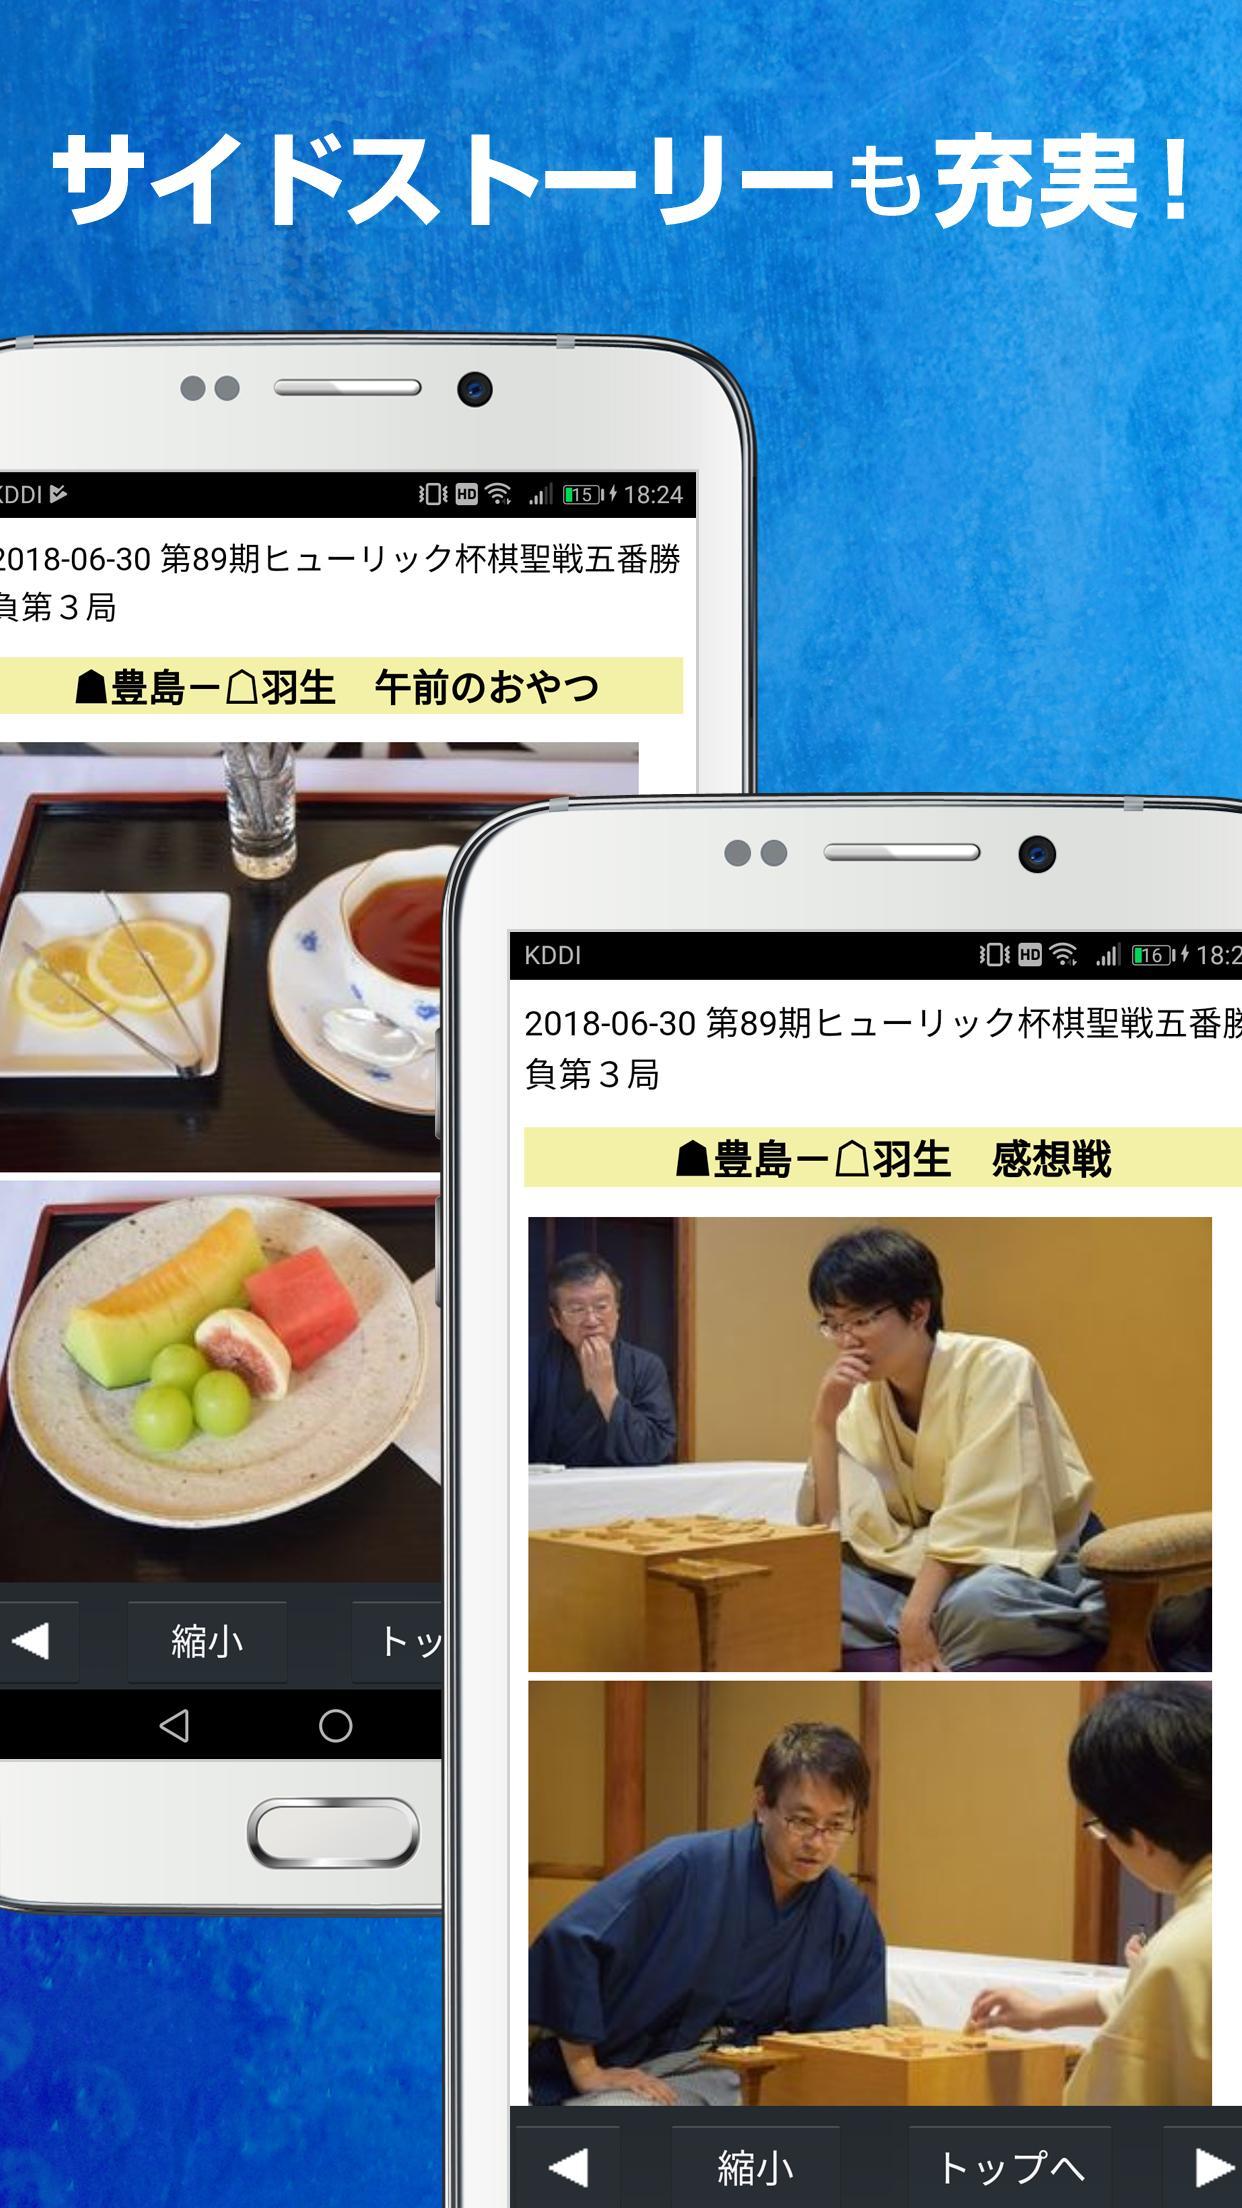 Shogi Live Subscription 2014 7.17 Screenshot 4